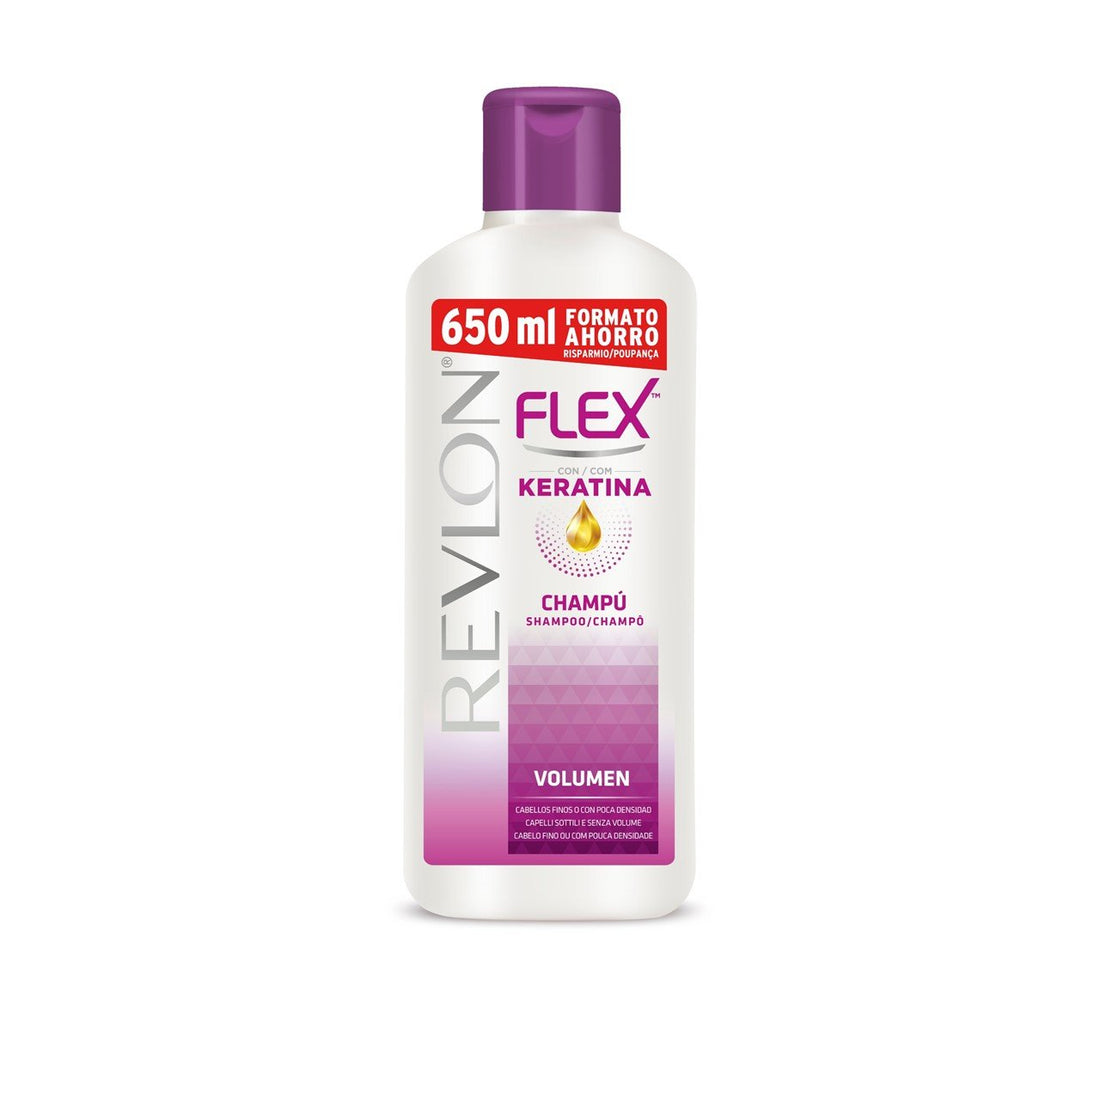 Revlon Flex Keratin Volume Shampoo 650ml